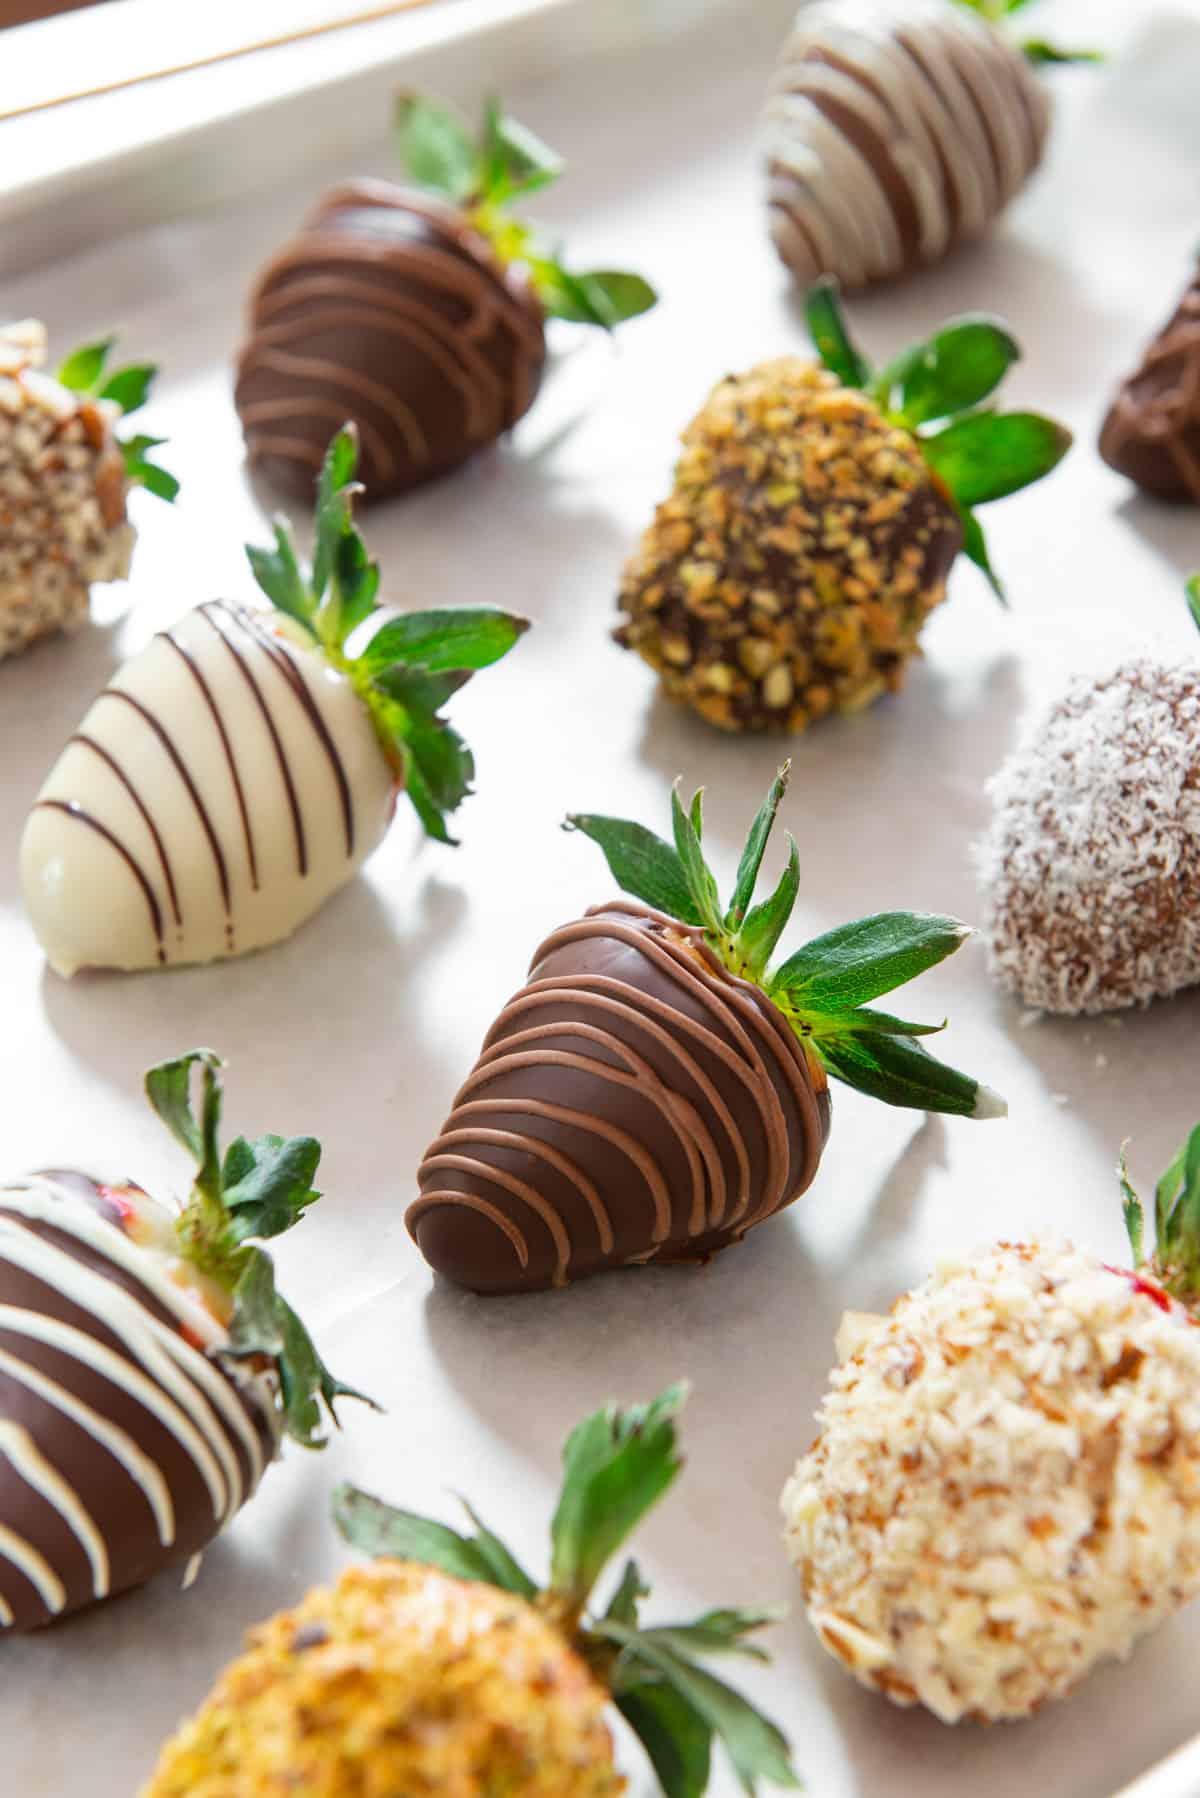 https://www.fifteenspatulas.com/wp-content/uploads/2021/07/Chocolate-Covered-Strawberries-1.jpg